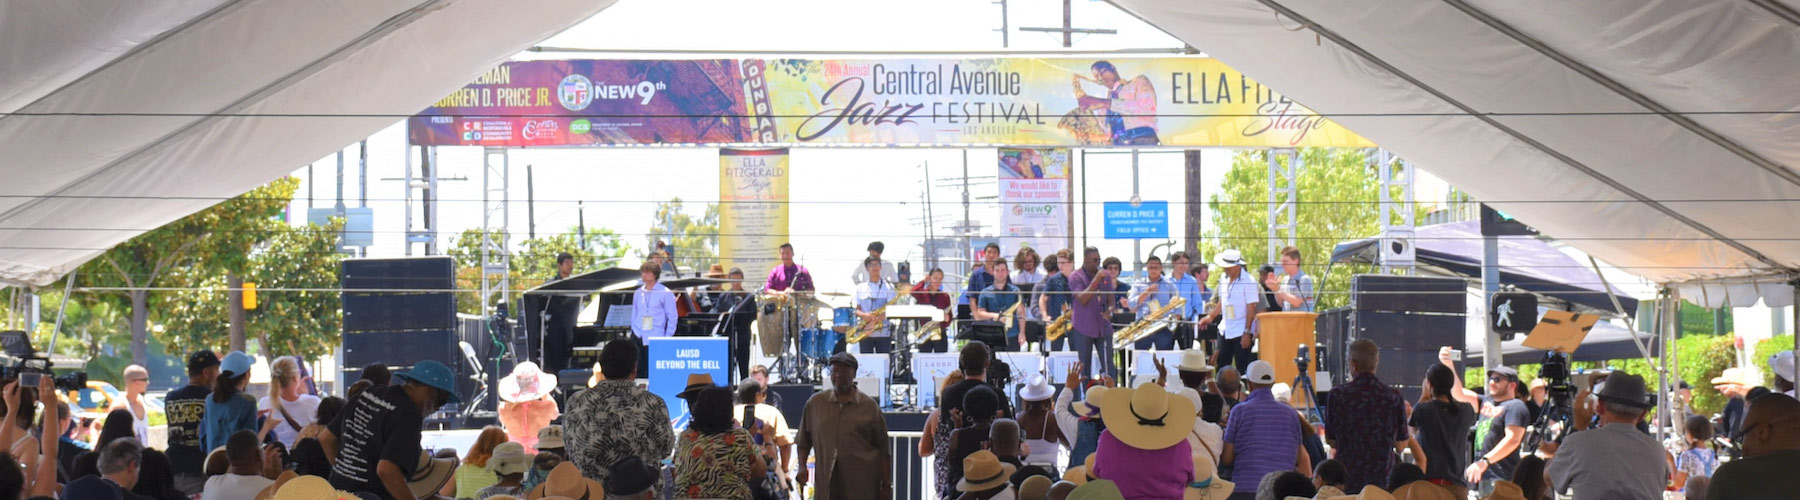 Central Avenue Jazz Festival